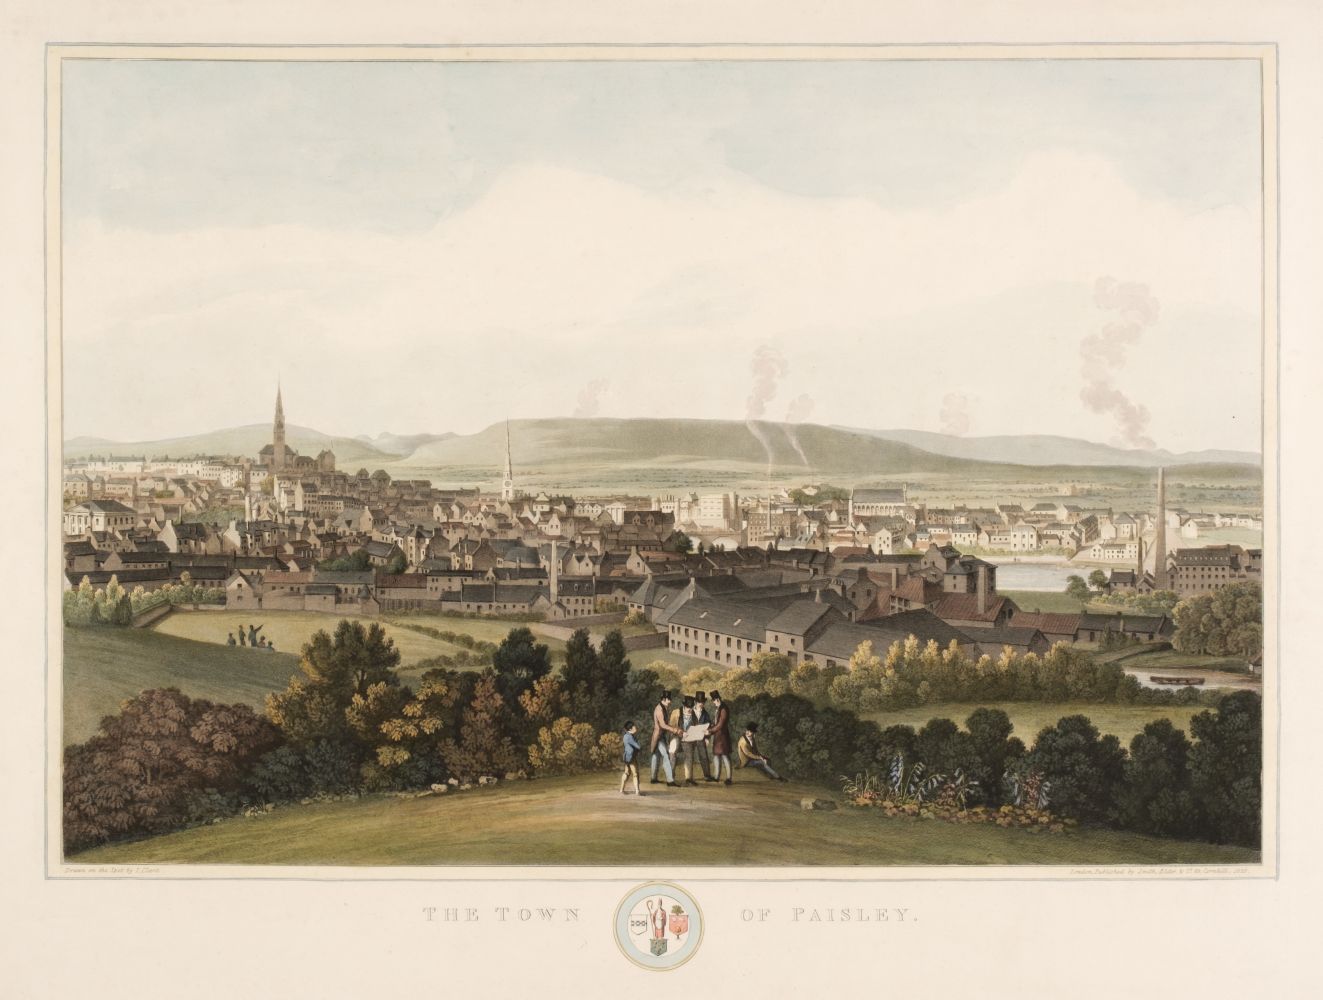 * Clark (John Heaviside, after). The Town of Paisley, London: Smith, Elder & Co., 1825